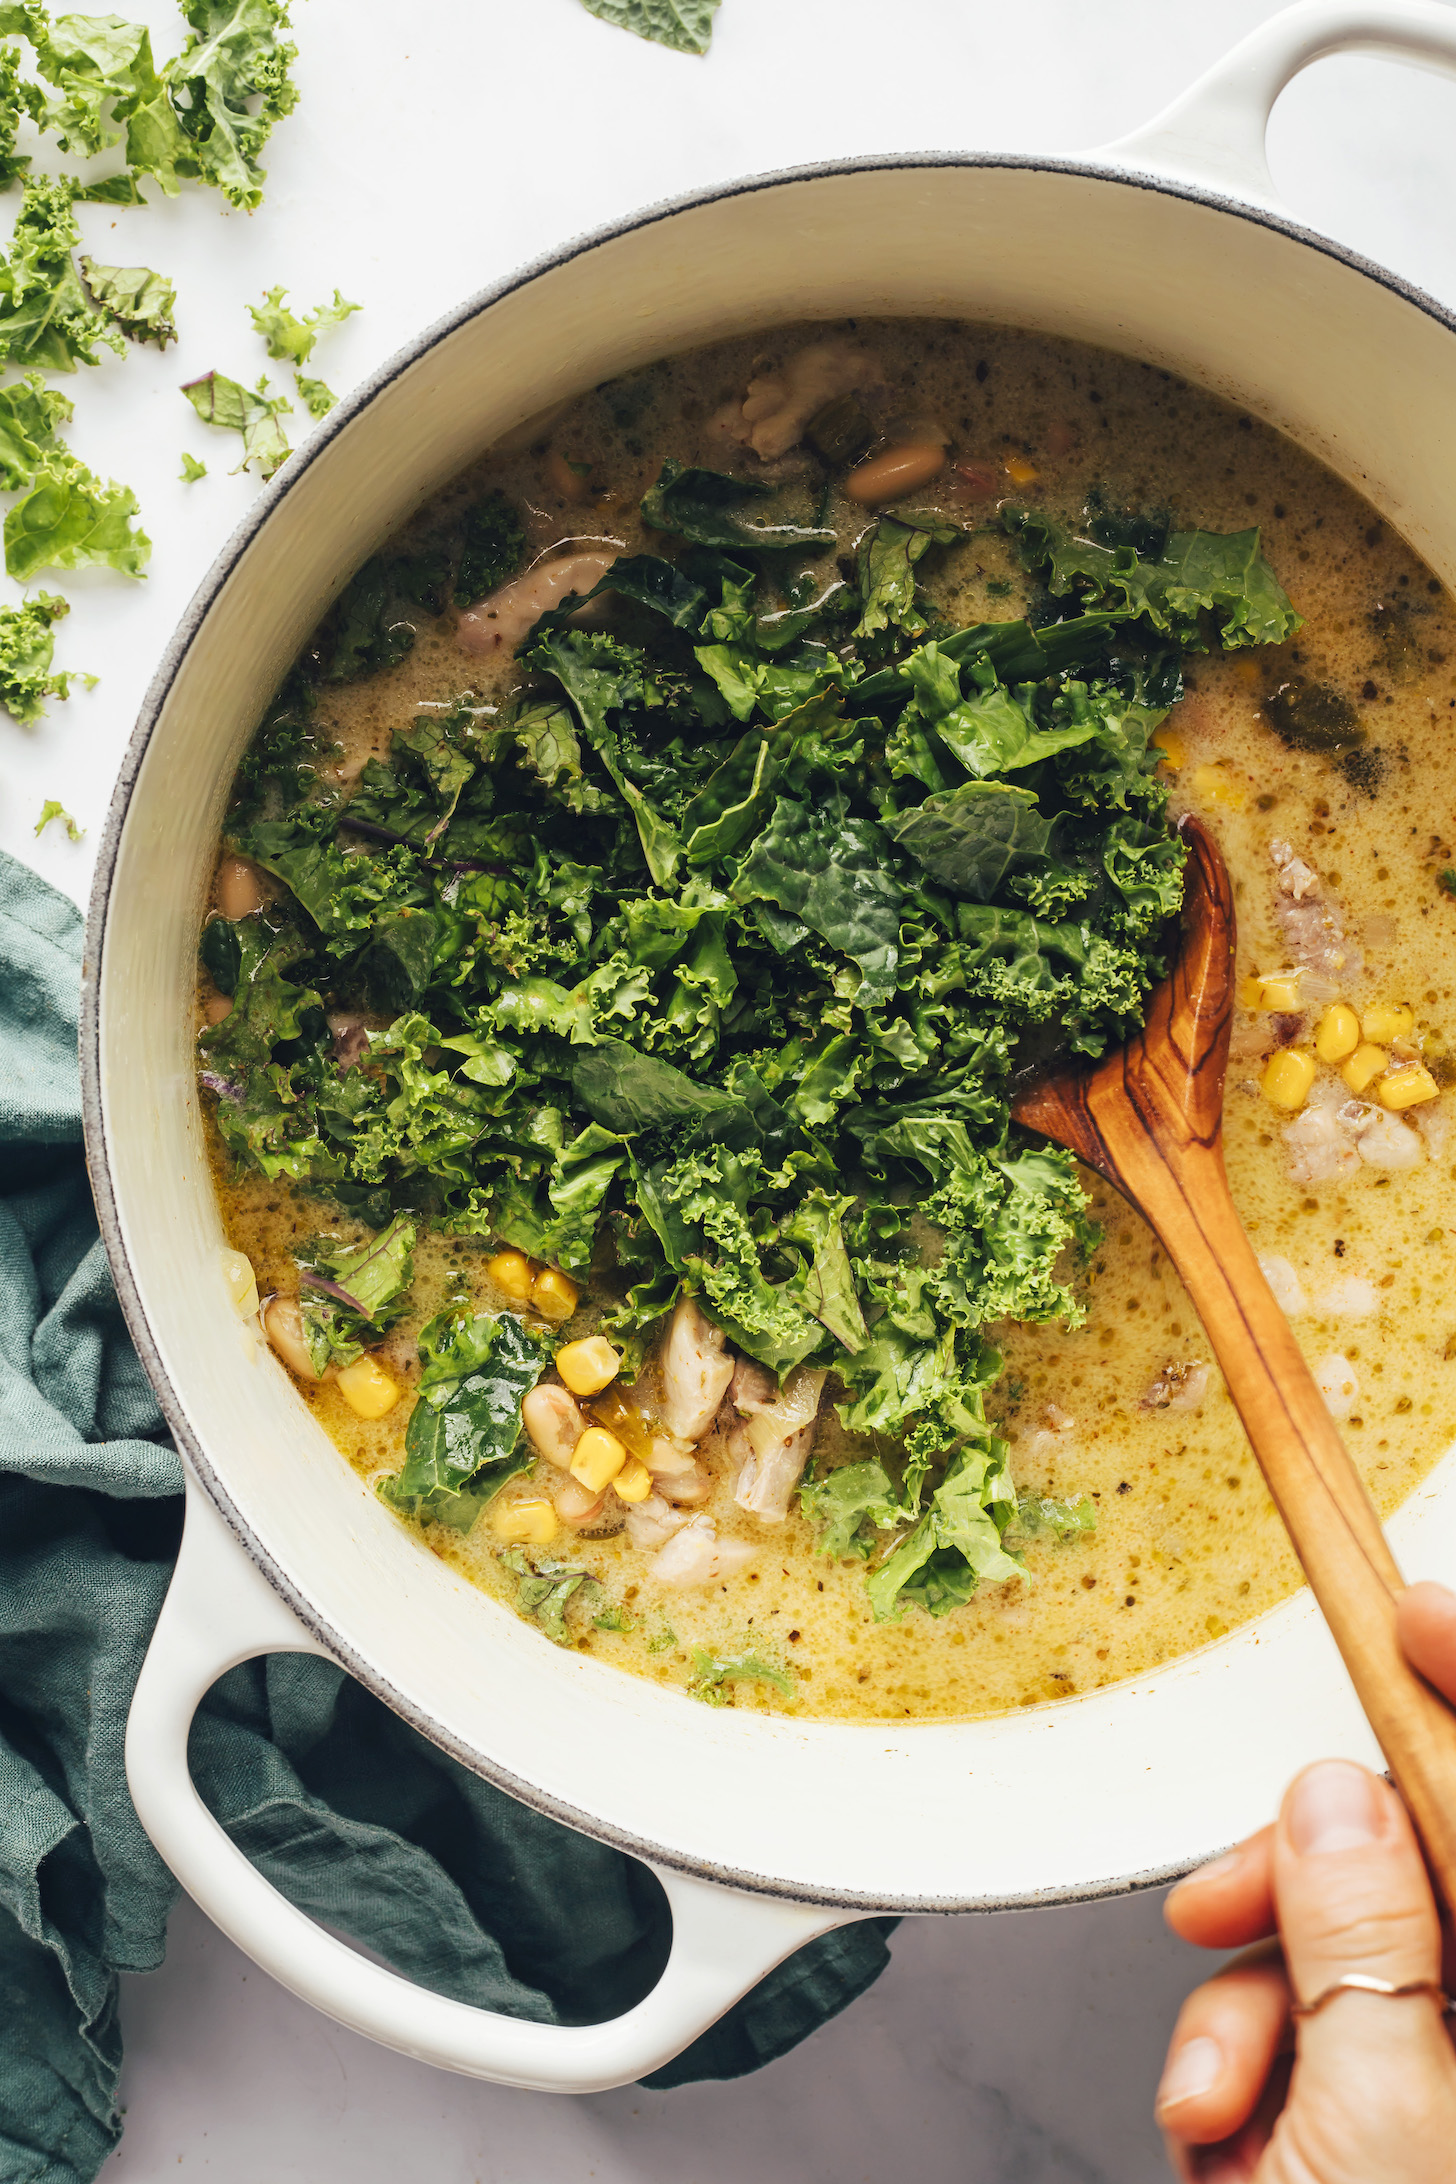 Kale in a pot of soup